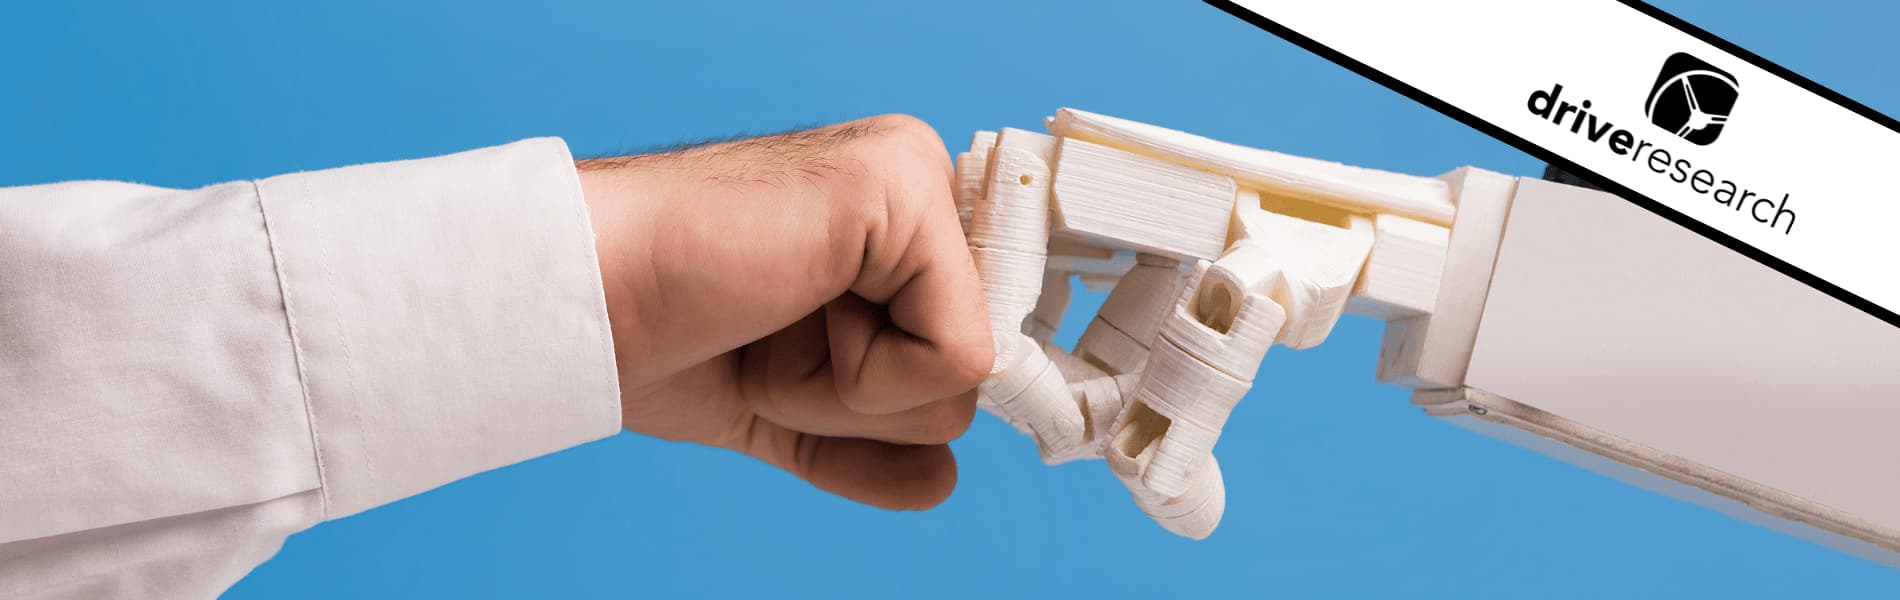 man and AI robot punching fists